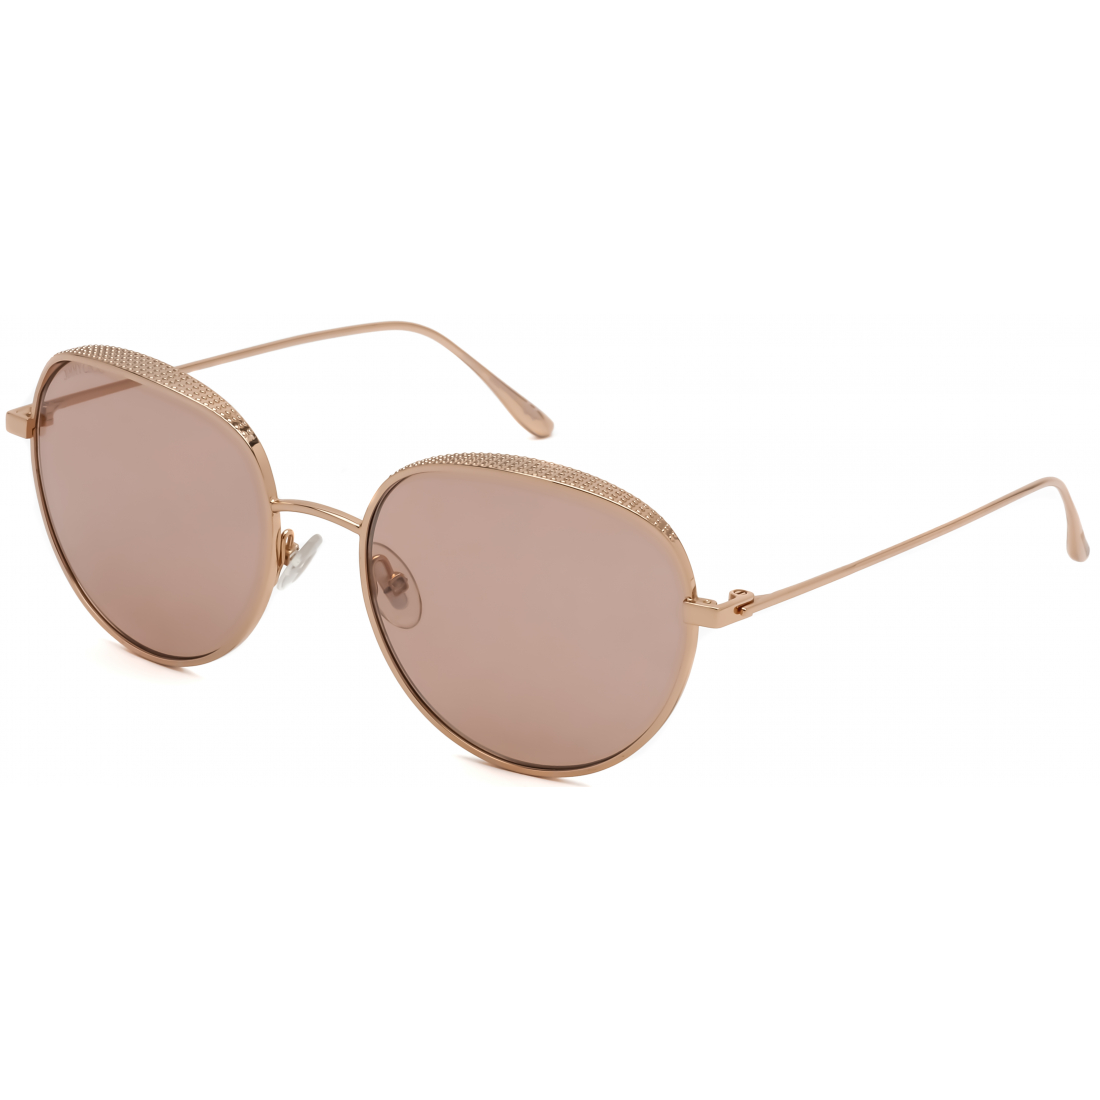 Women's 'ELLO/S BKU REDGD' Sunglasses